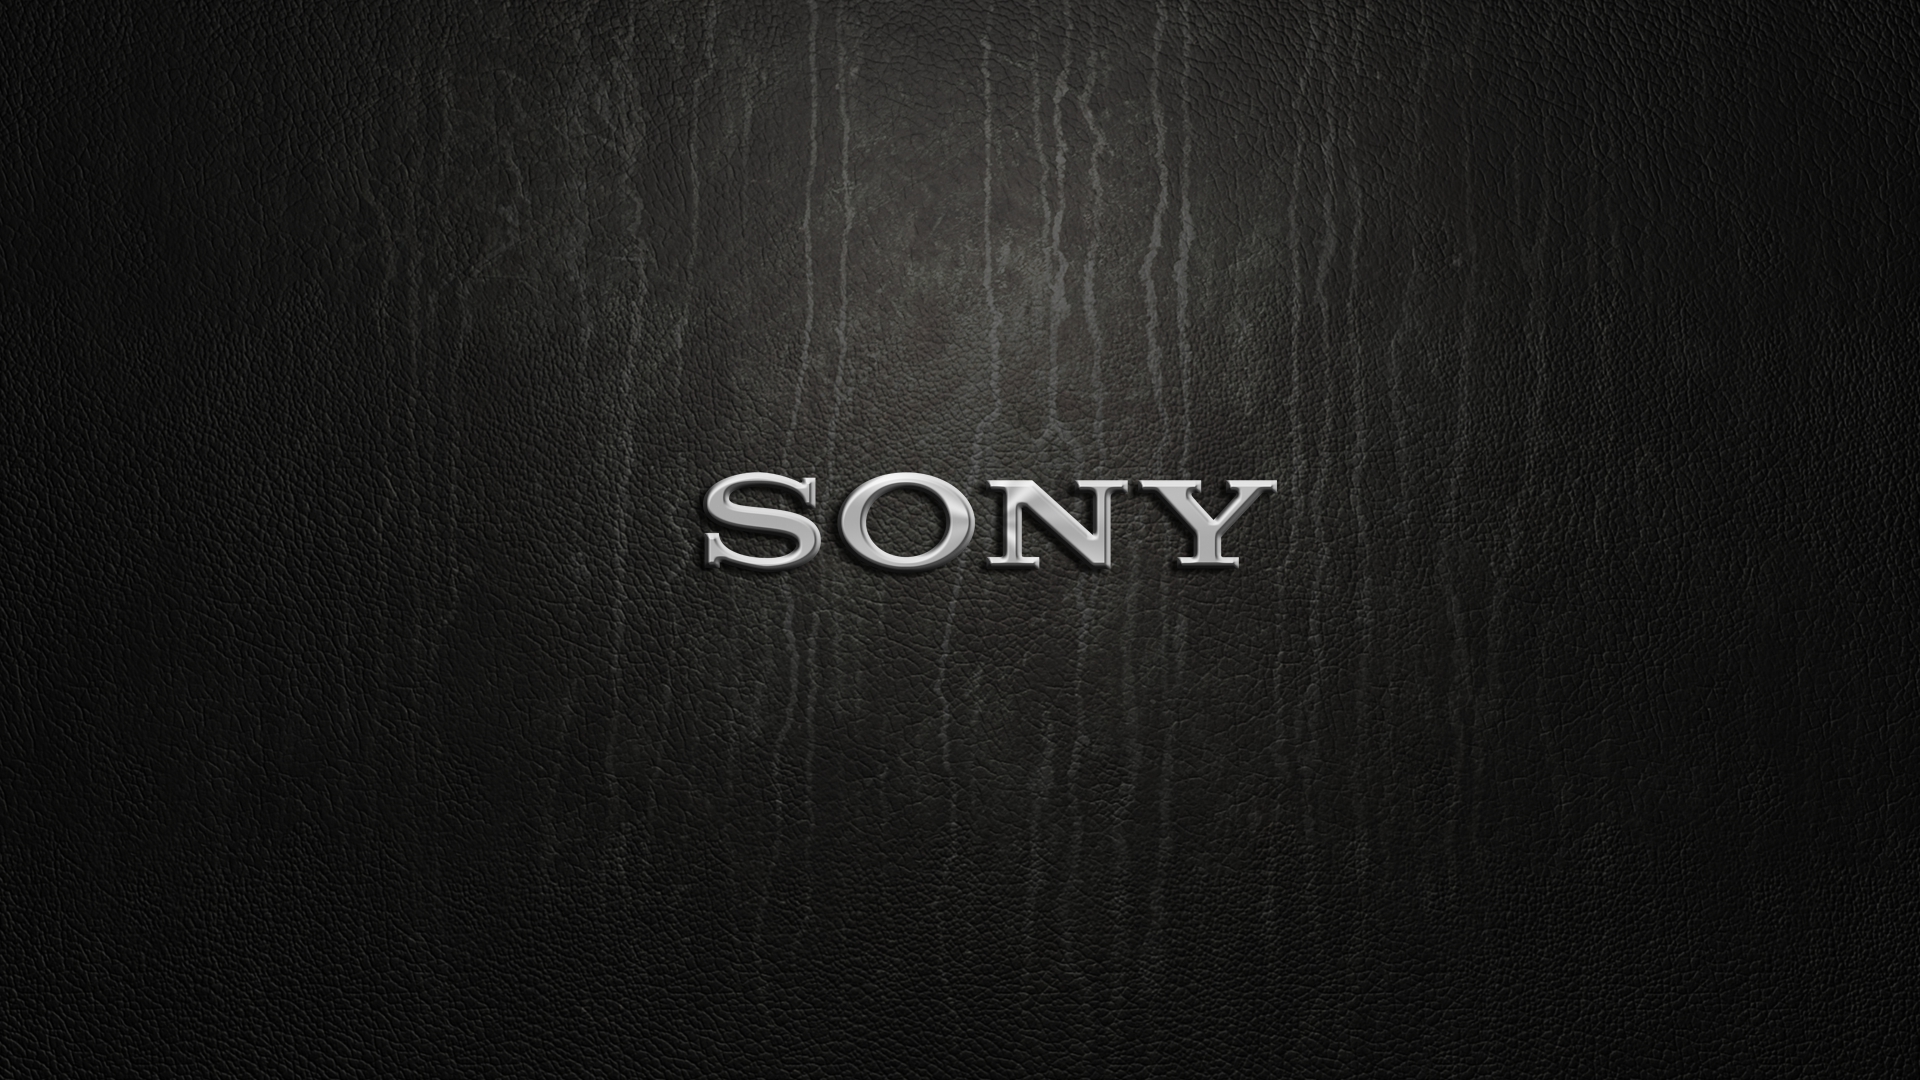 Sony HD Wallpapers